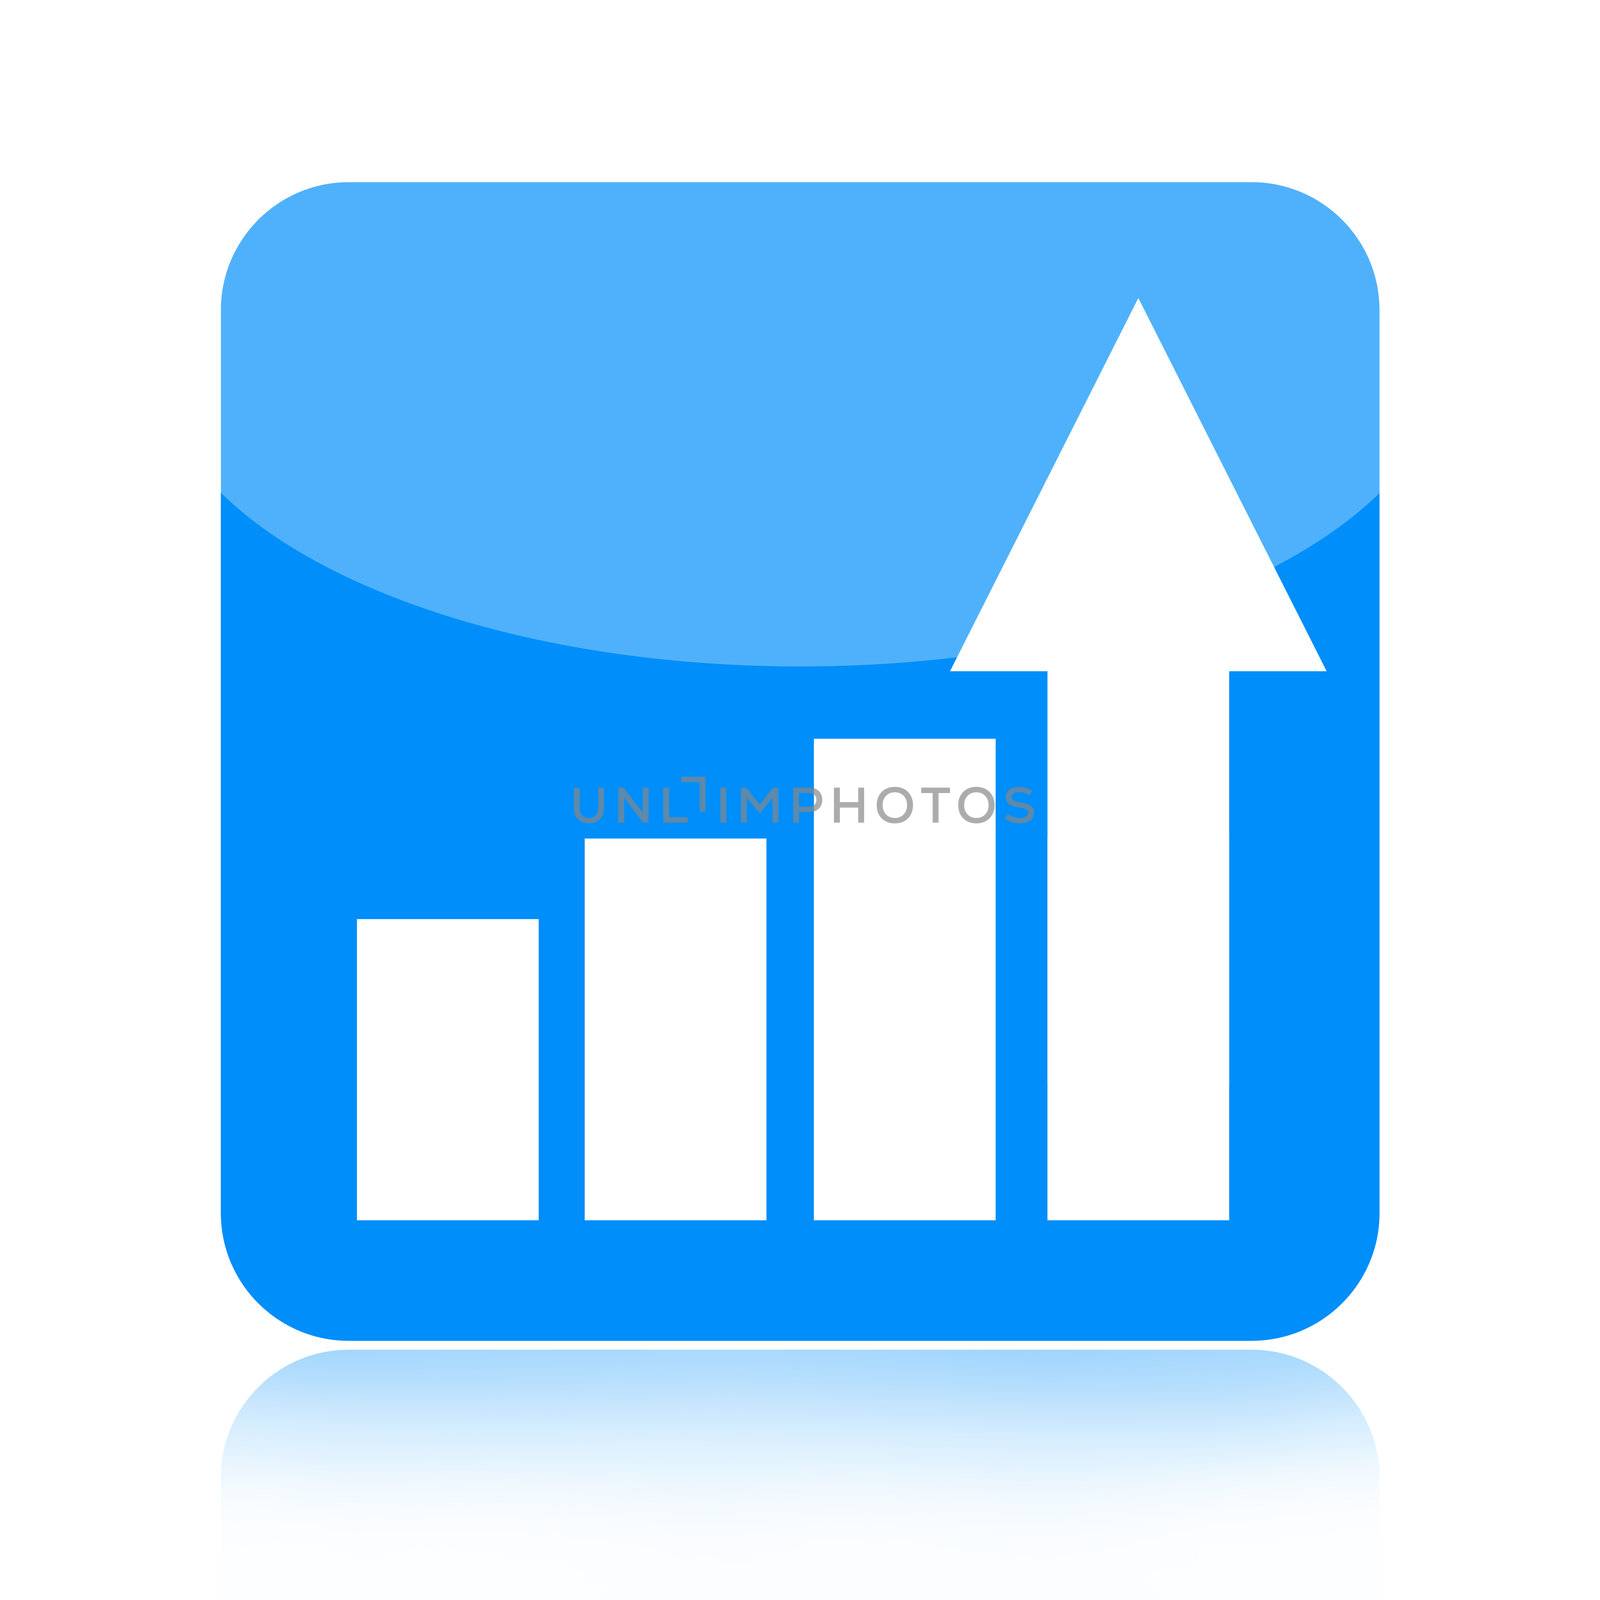 Business statistics icon by Skovoroda